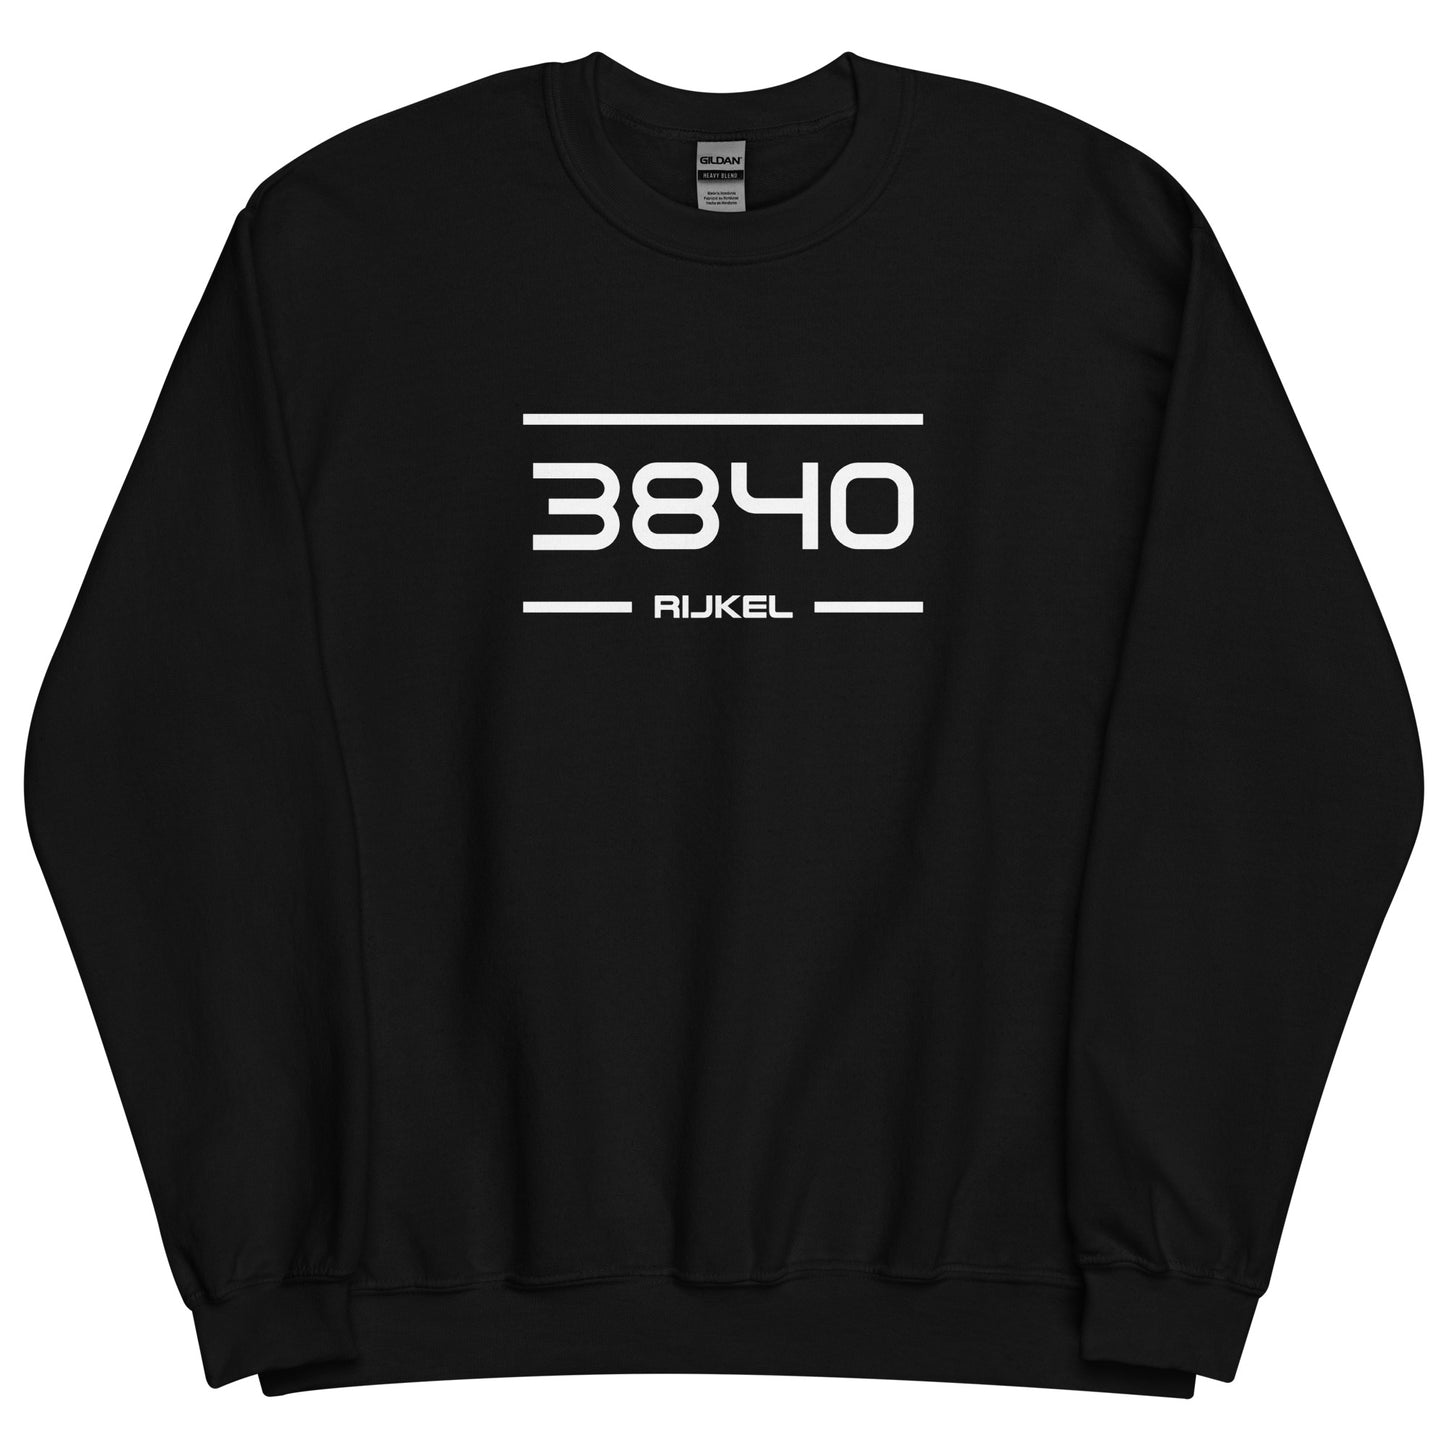 Sweater - 3840 - Rijkel (M/V)